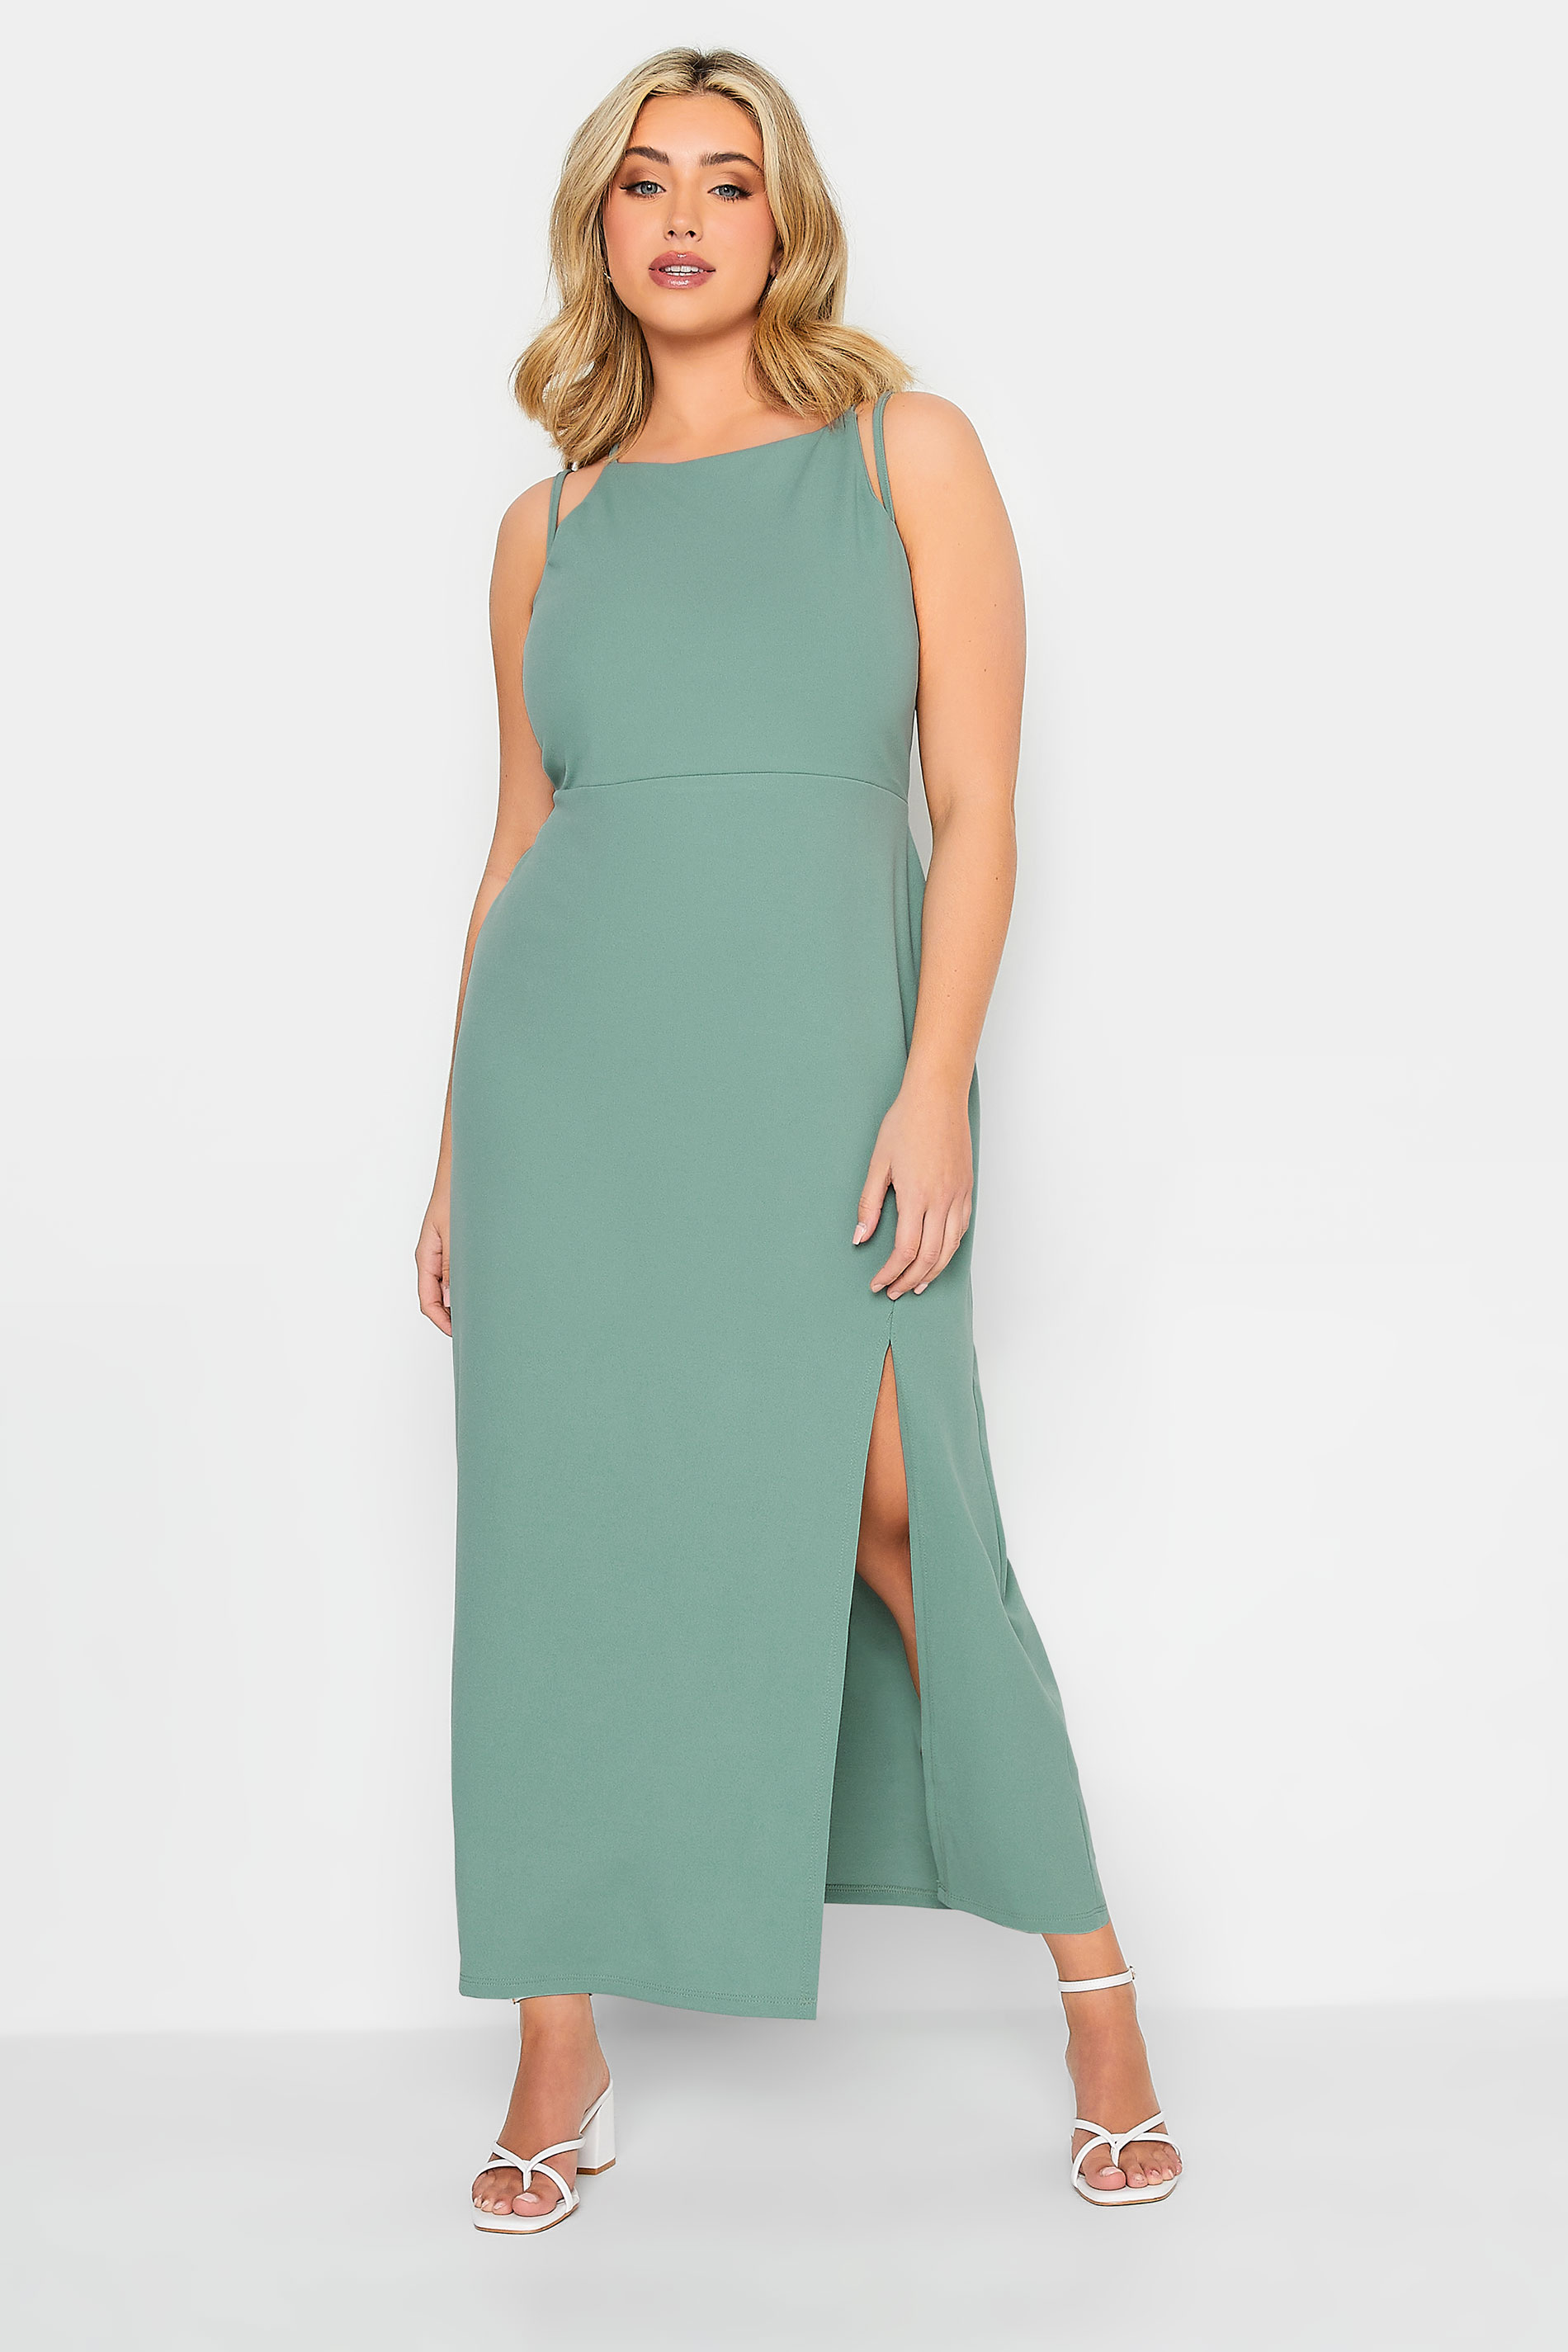 YOURS PETITE Plus Size Sage Green Split Hem Maxi Dress | Yours Clothing 1